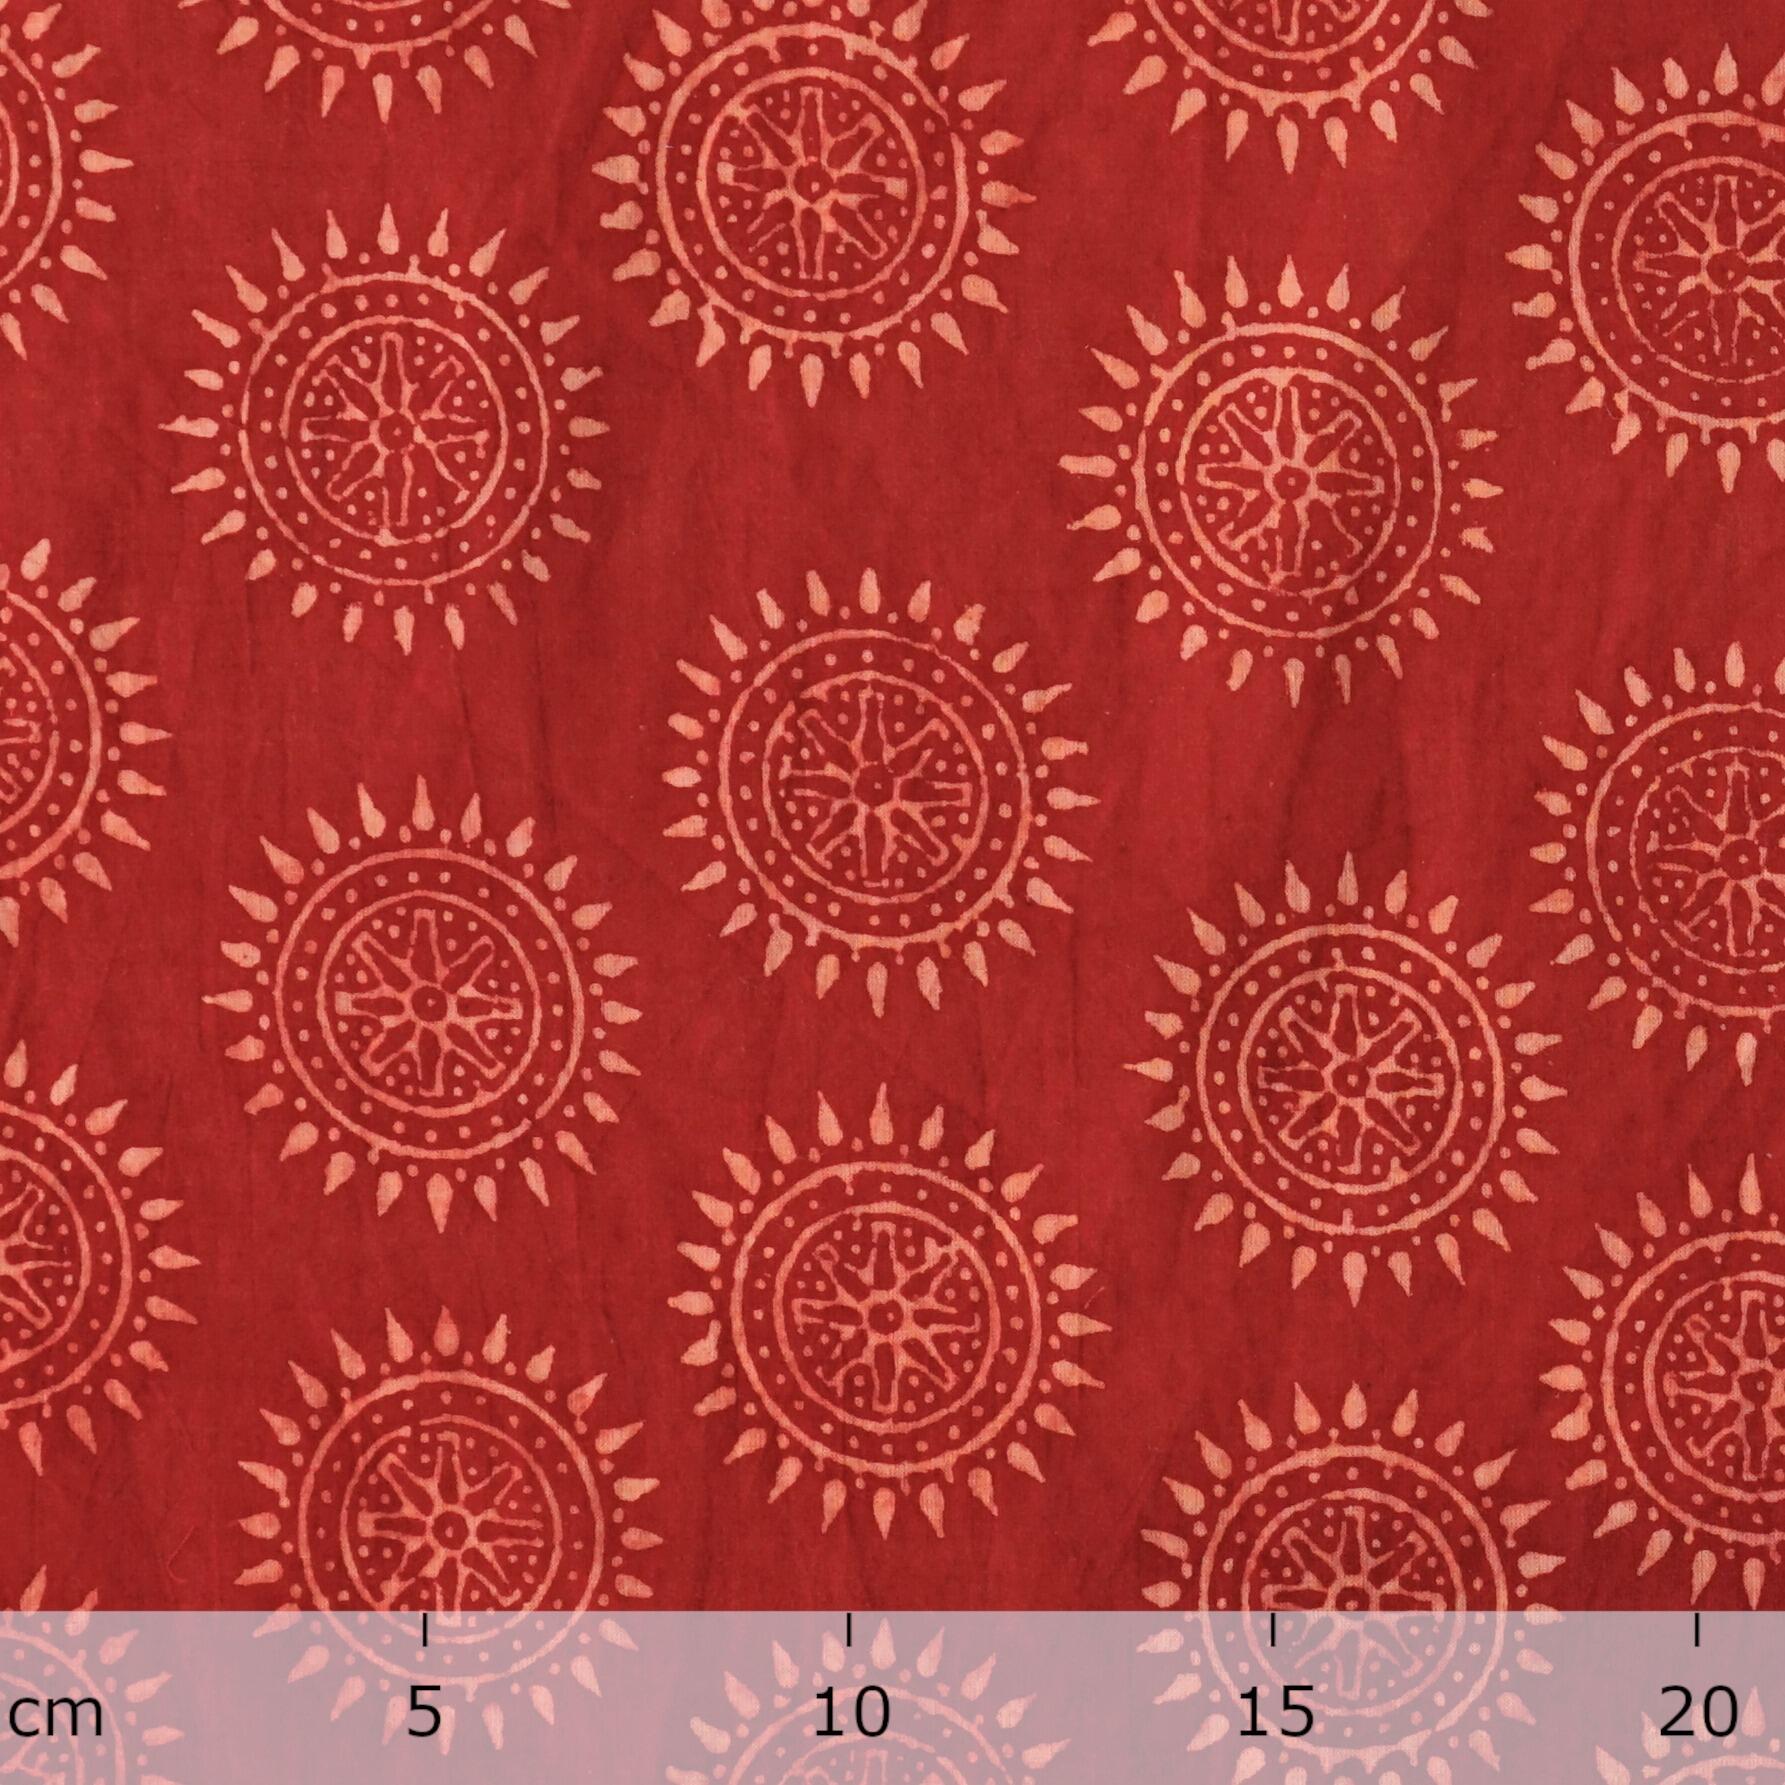 4 - AHM52 - Block-Printed Cotton Fabric - Alizarin Dye - Red - Troubadour Design - Ruler